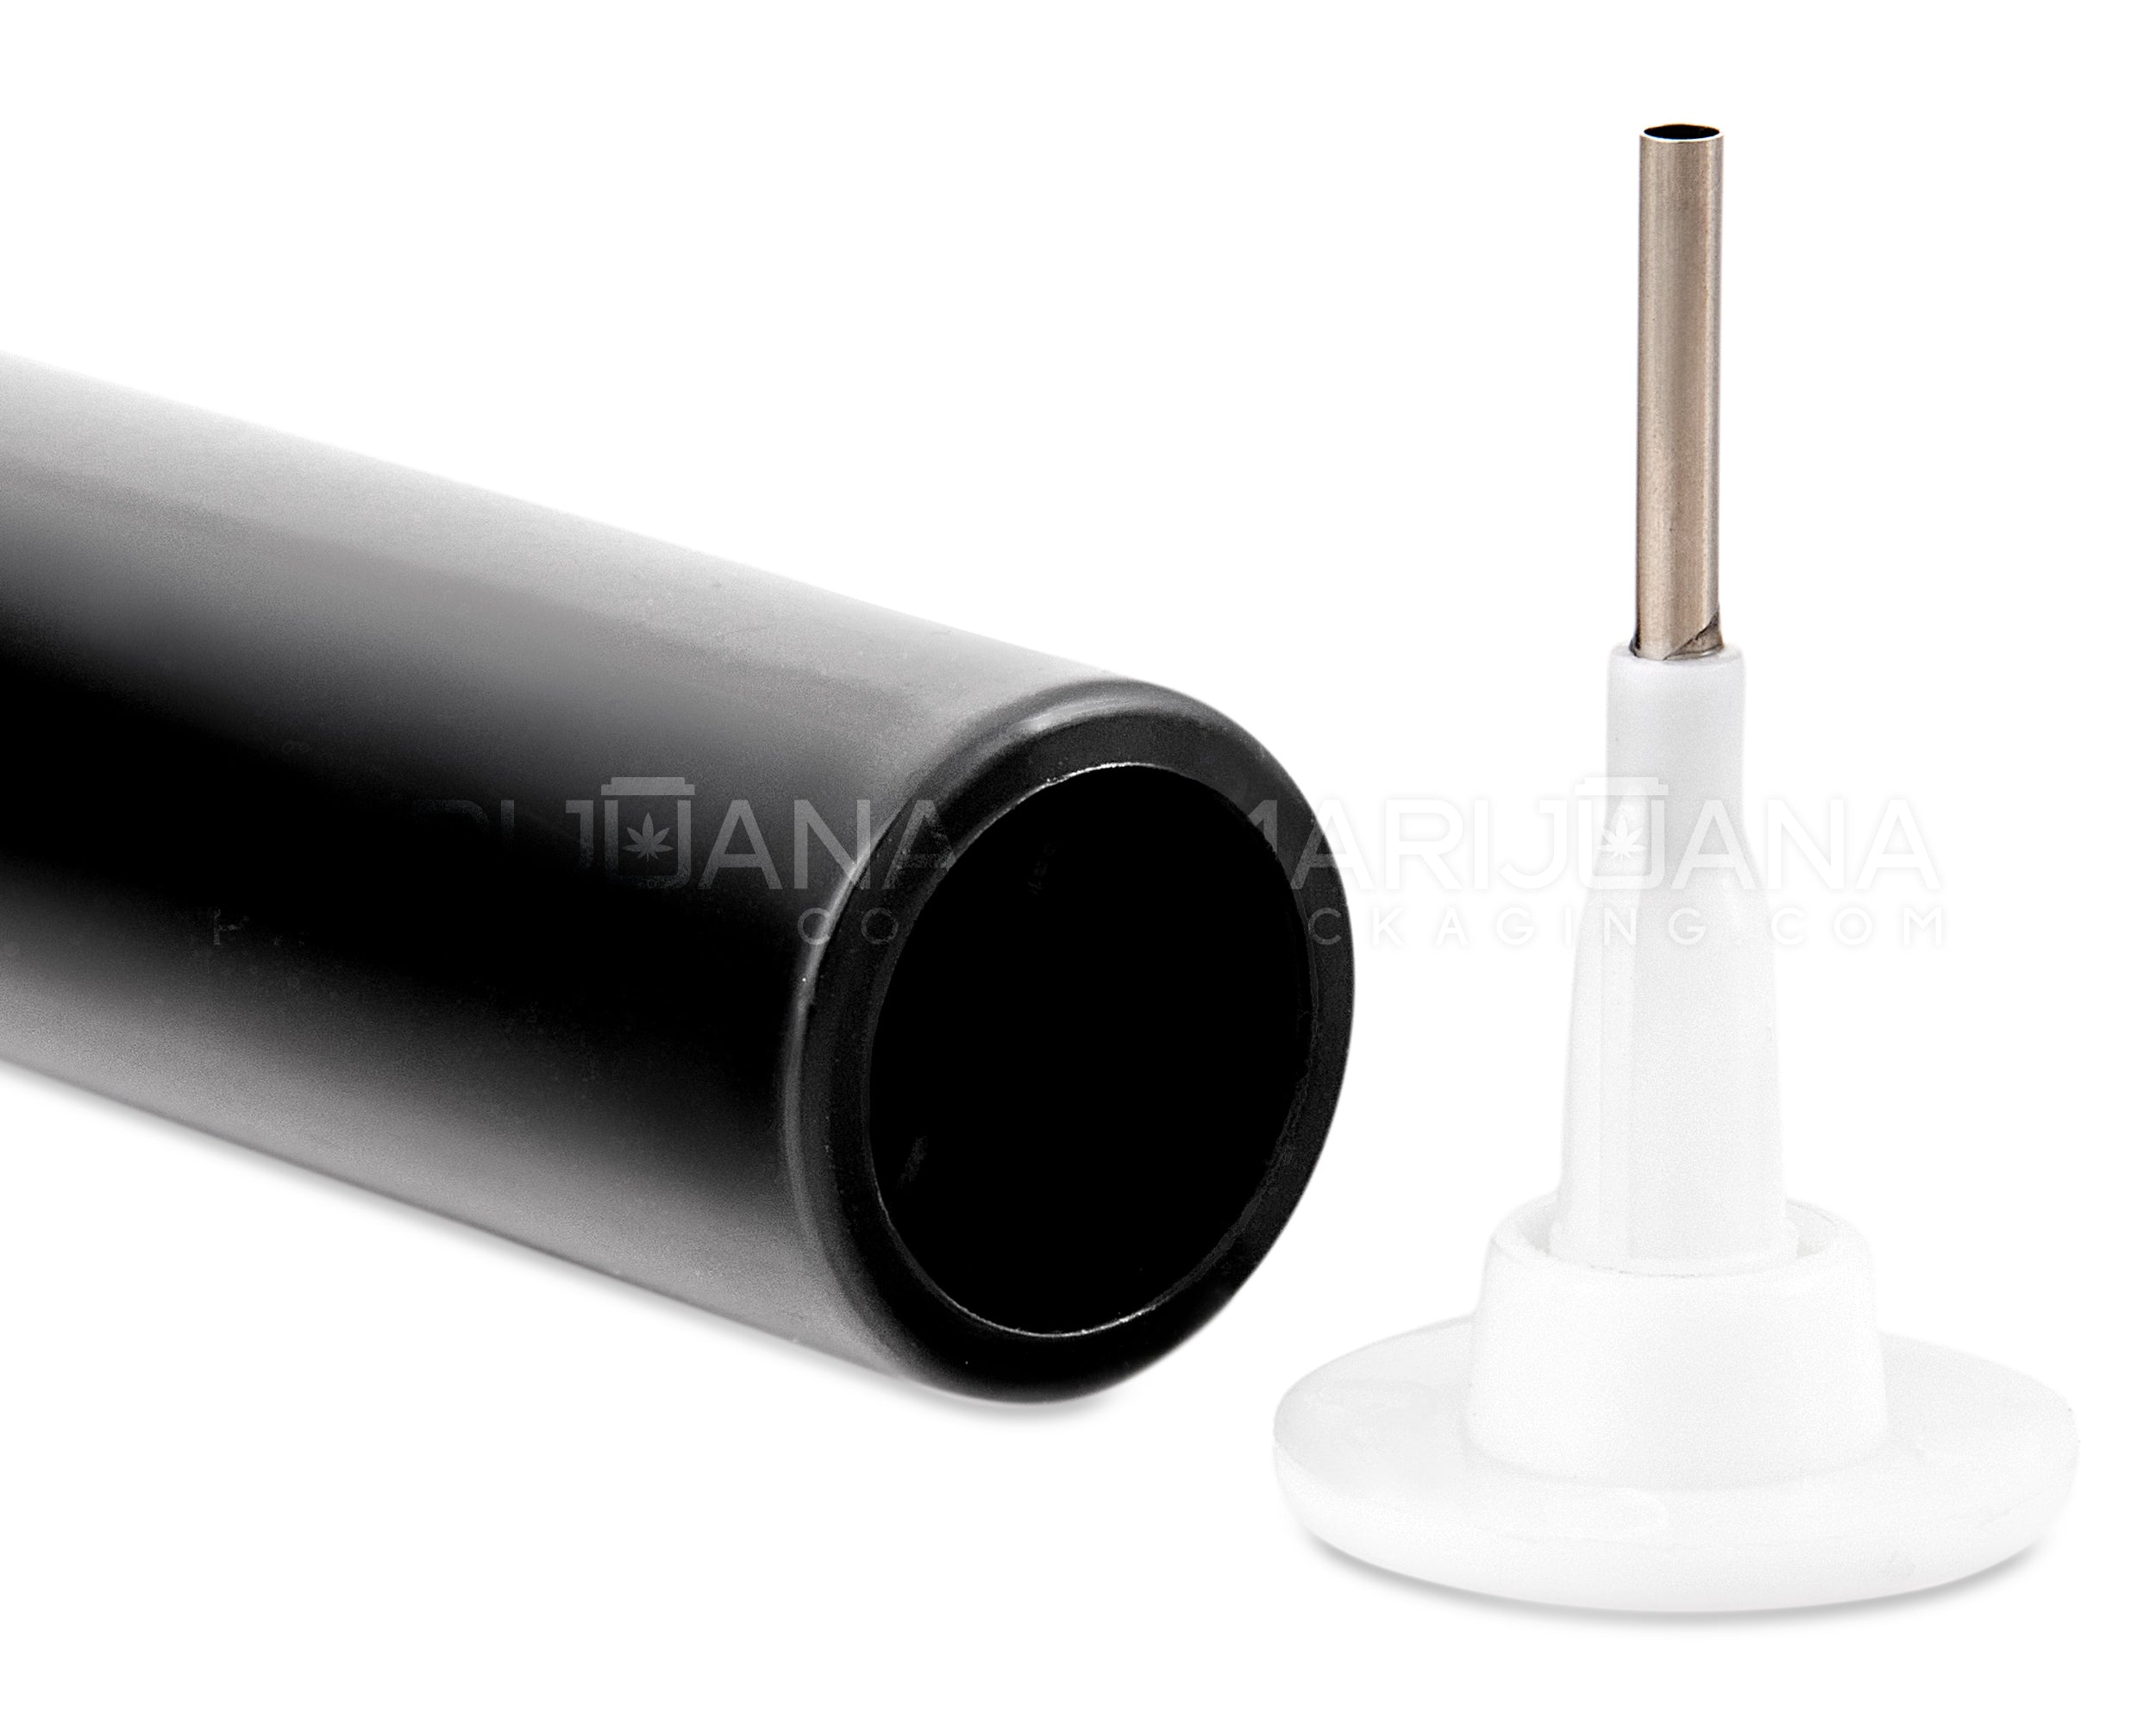 Child Resistant & Luer Lock | DymaPak Twistspenser Black Plastic Dab Applicator Syringes | 1mL - 0.33mL Increments - 11